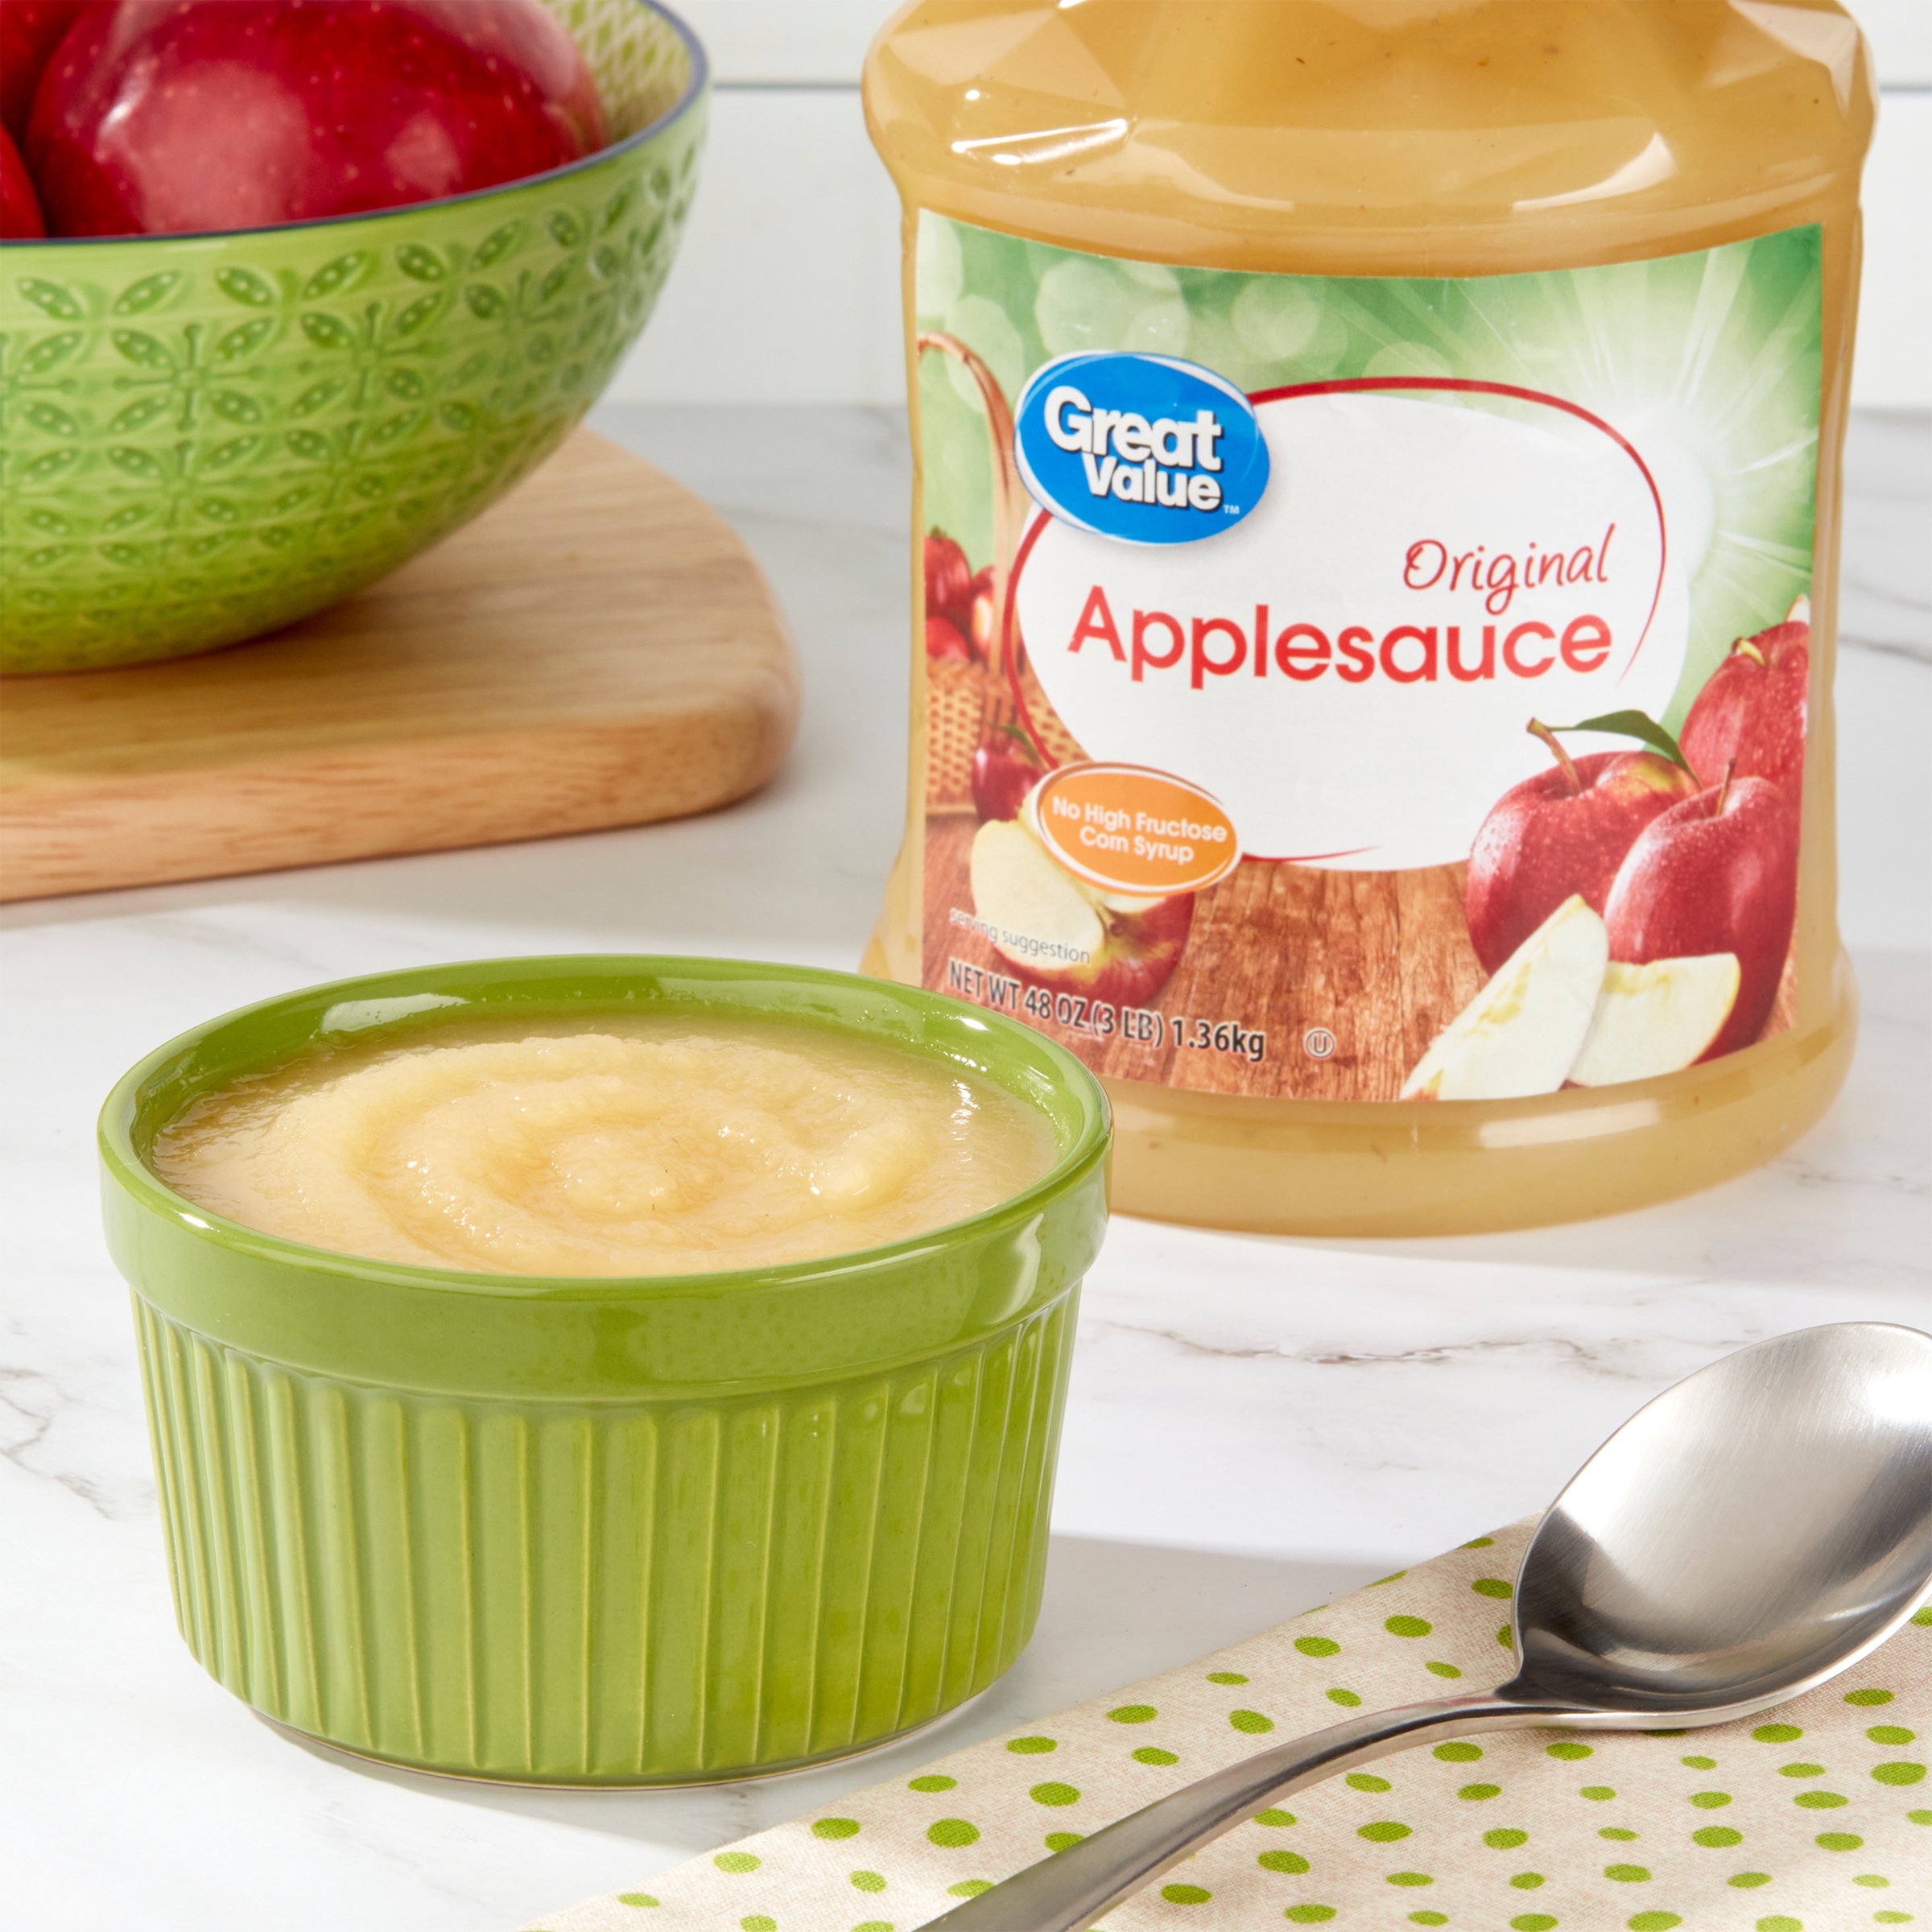 Great Value Original Applesauce, 48 oz Jar - image 2 of 7